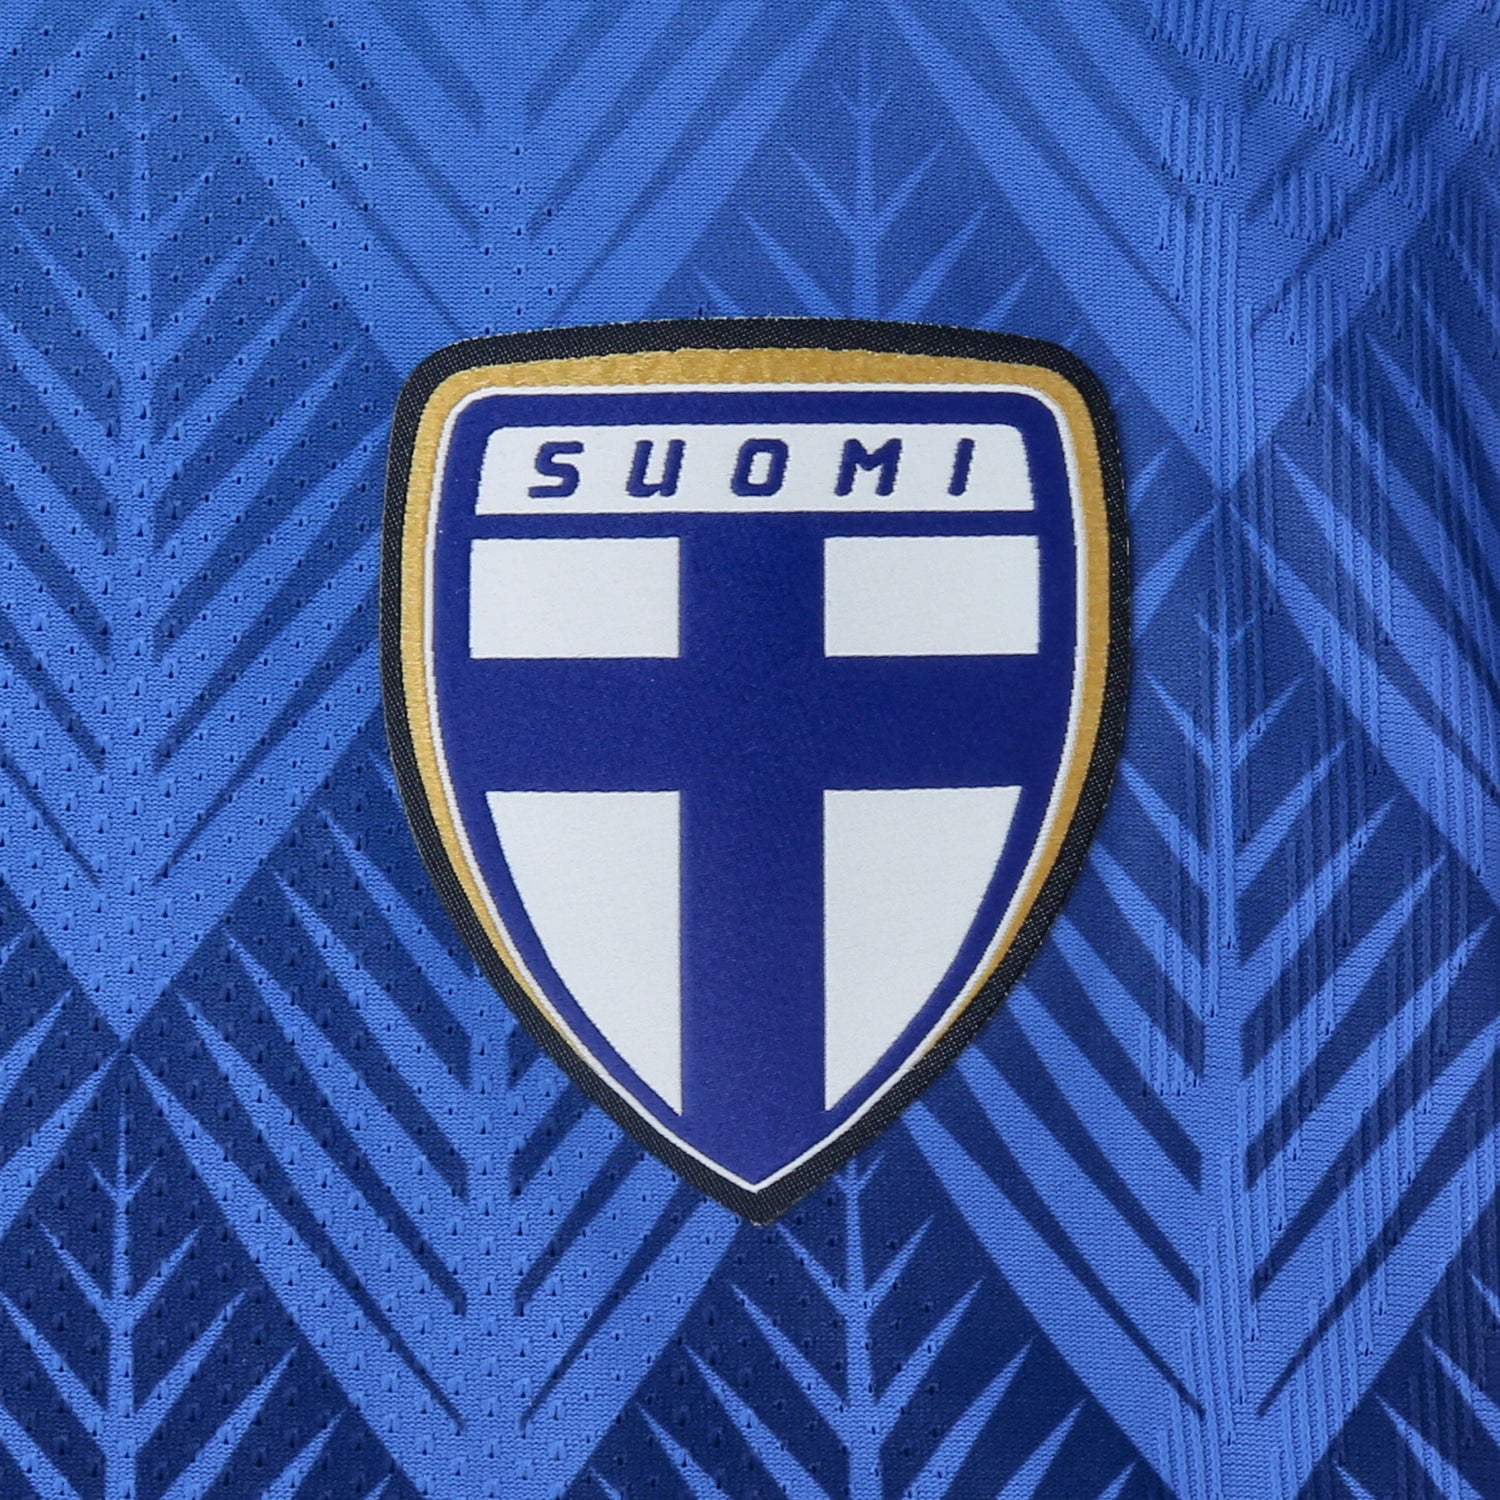 Finland Official Away Jersey 2022/23, Nissilä Print